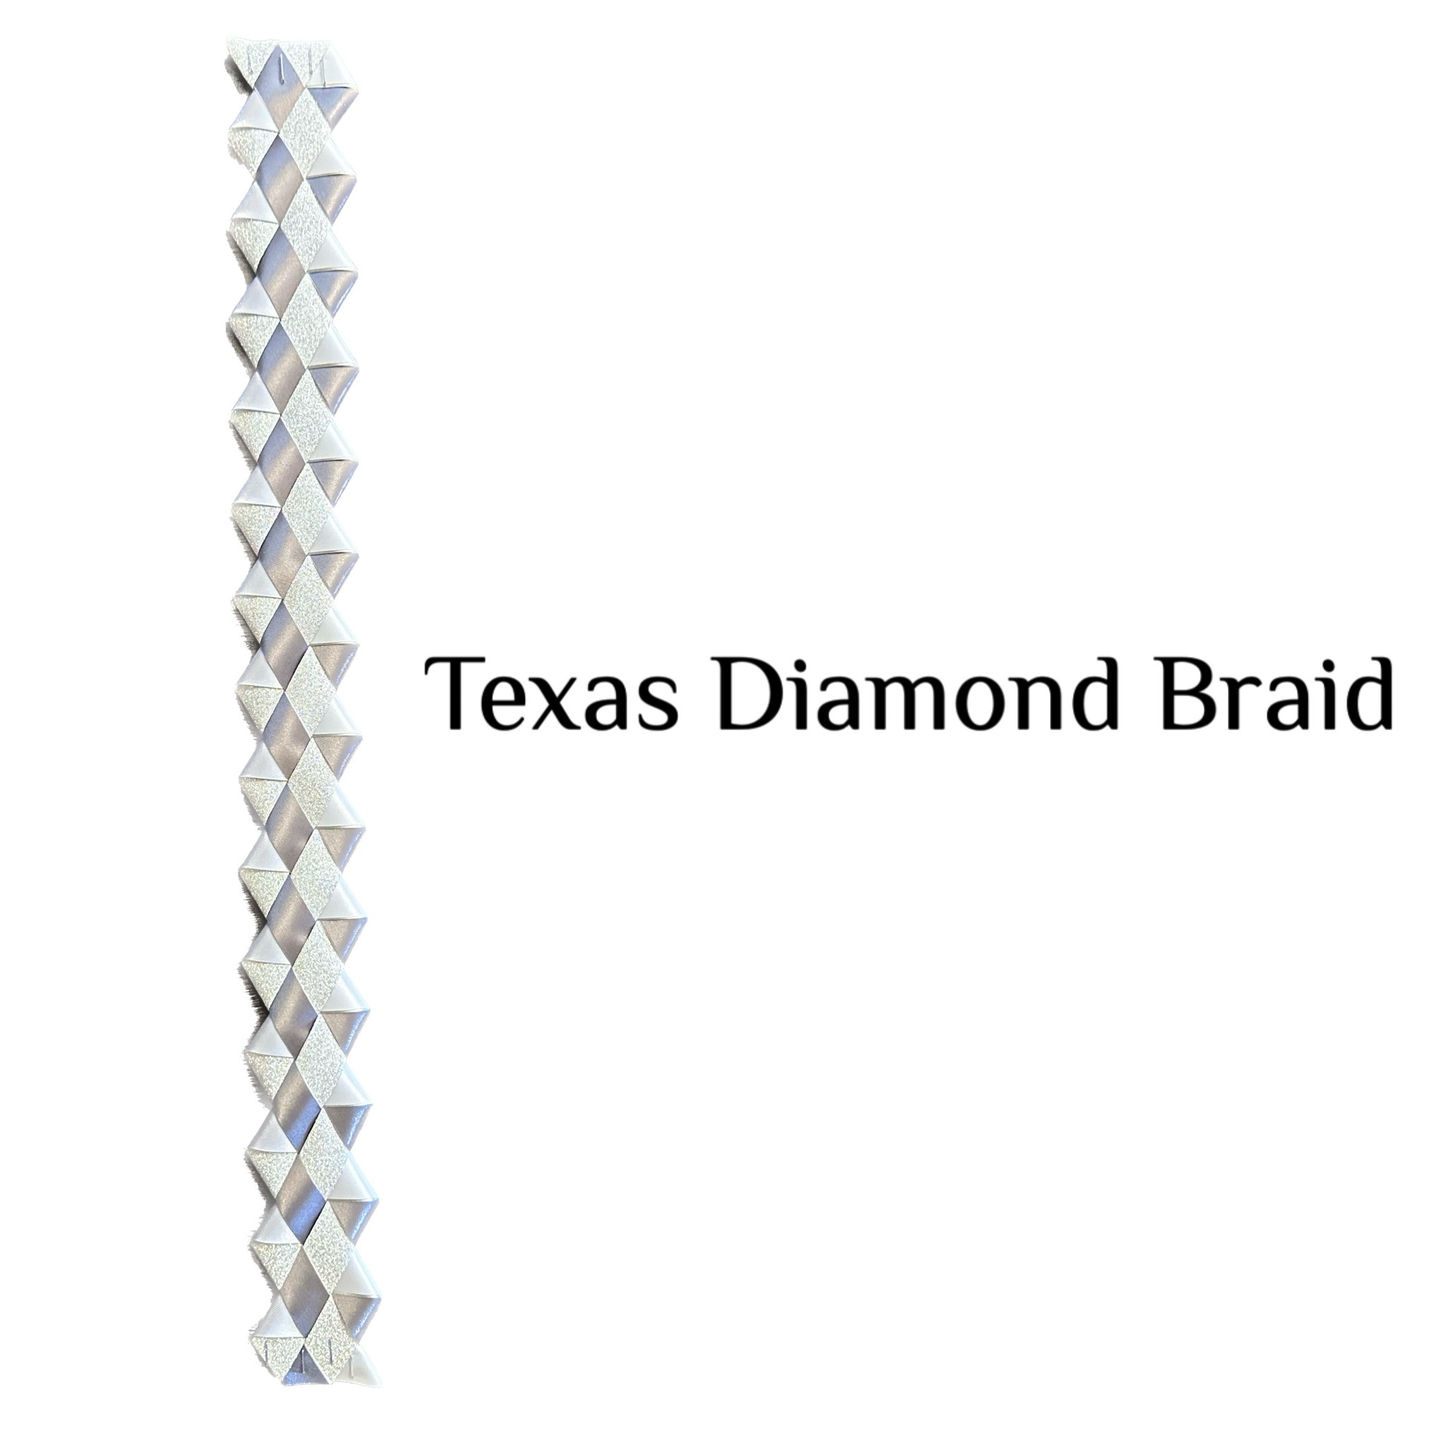 Texas Diamond Braid